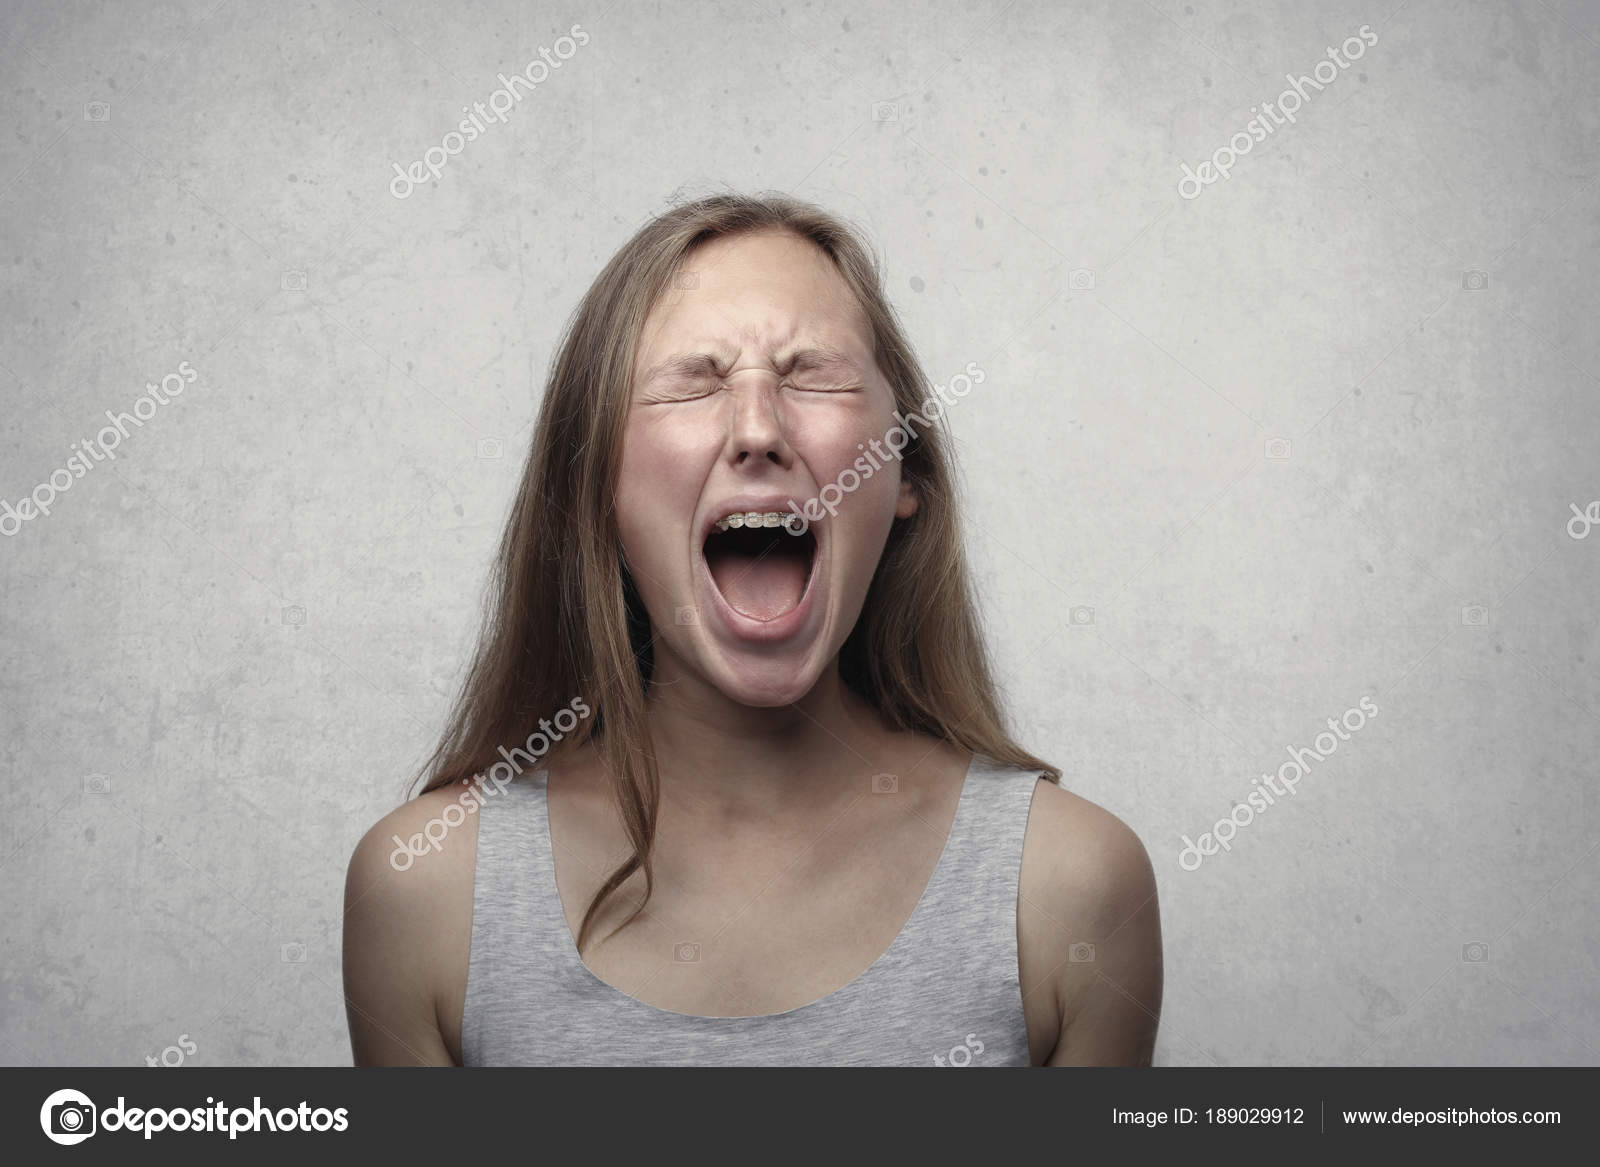 stock image woman screaming